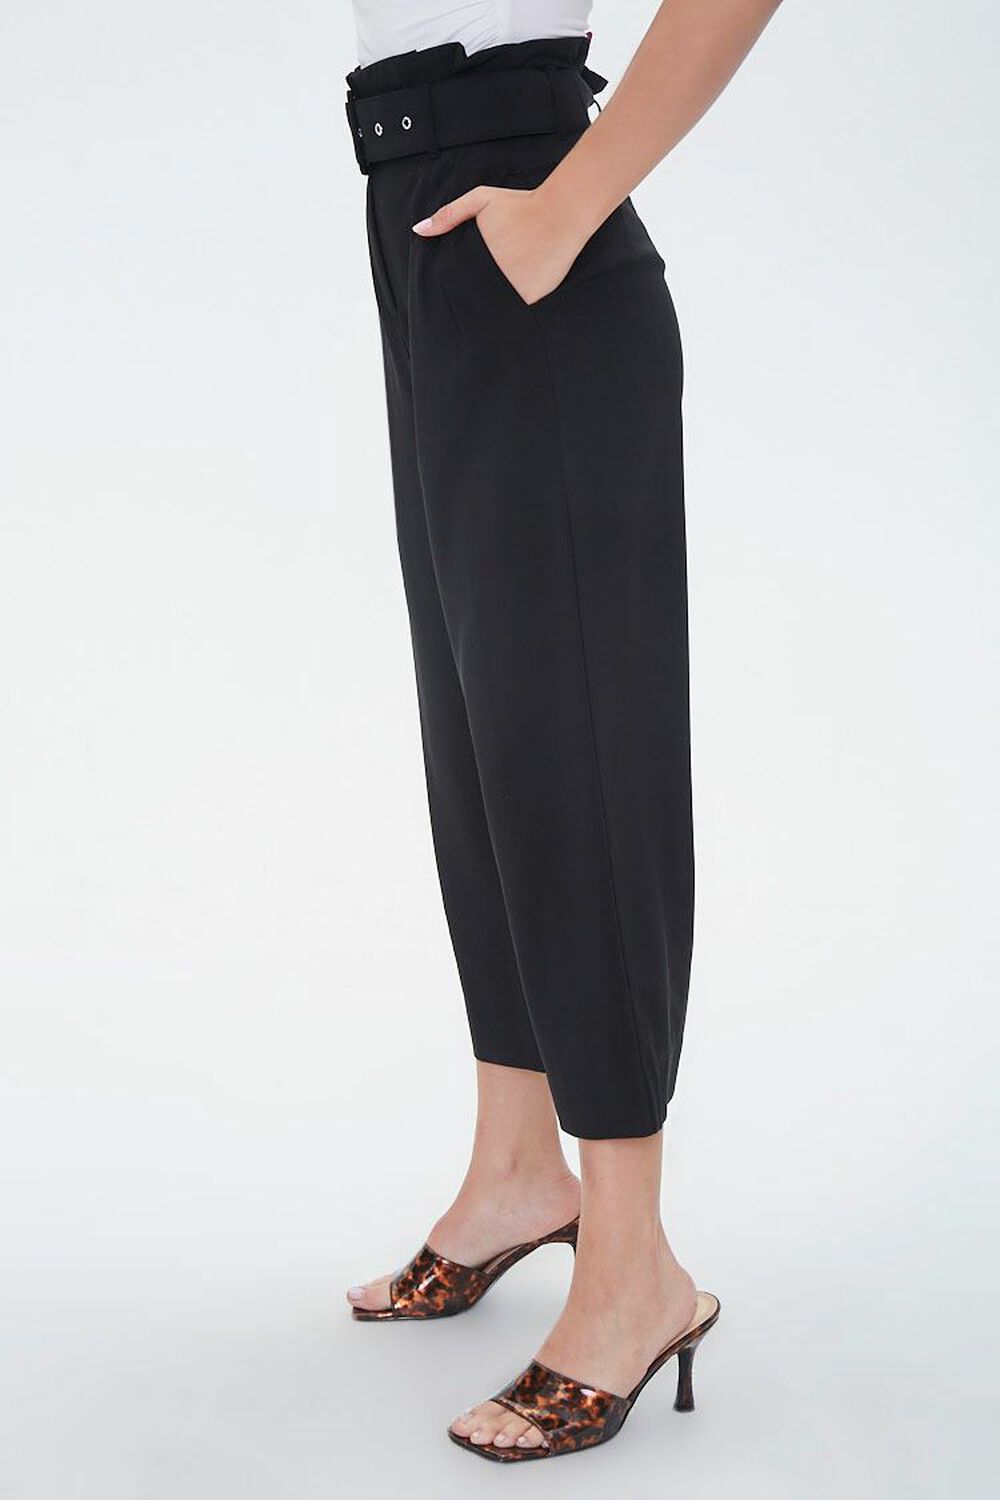 BLACK Crepe Wide-Leg Paperbag Pants, image 3